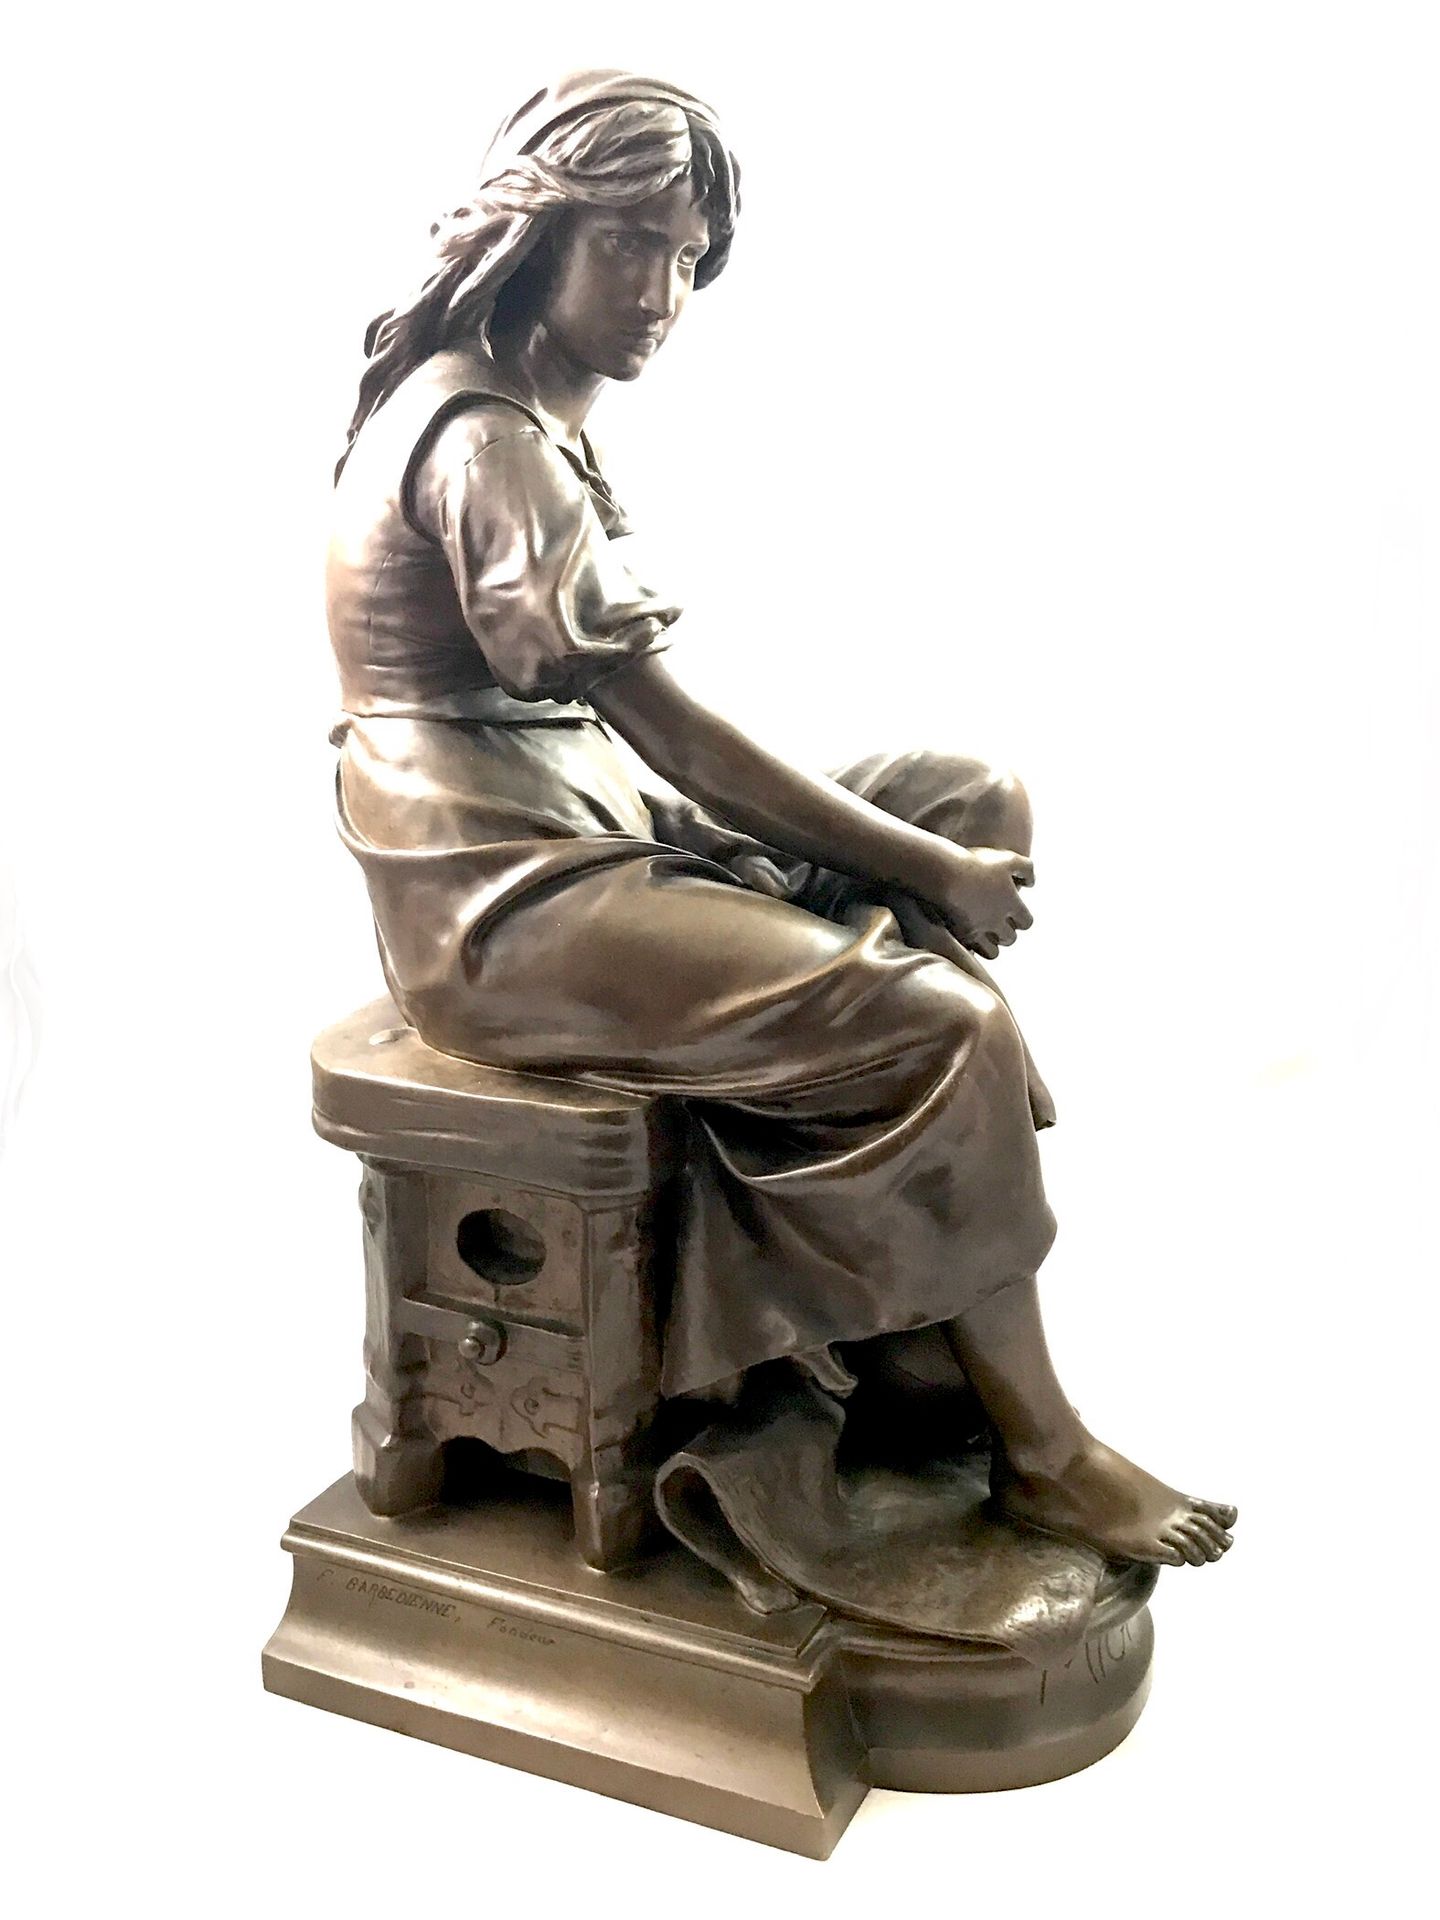 Null 欧仁-安托万-艾泽林 (1821-1902)

米尼翁，1880年

带有棕色铜锈的青铜器

53 x 28 x 21 厘米

有签名，基座上有标题，&hellip;